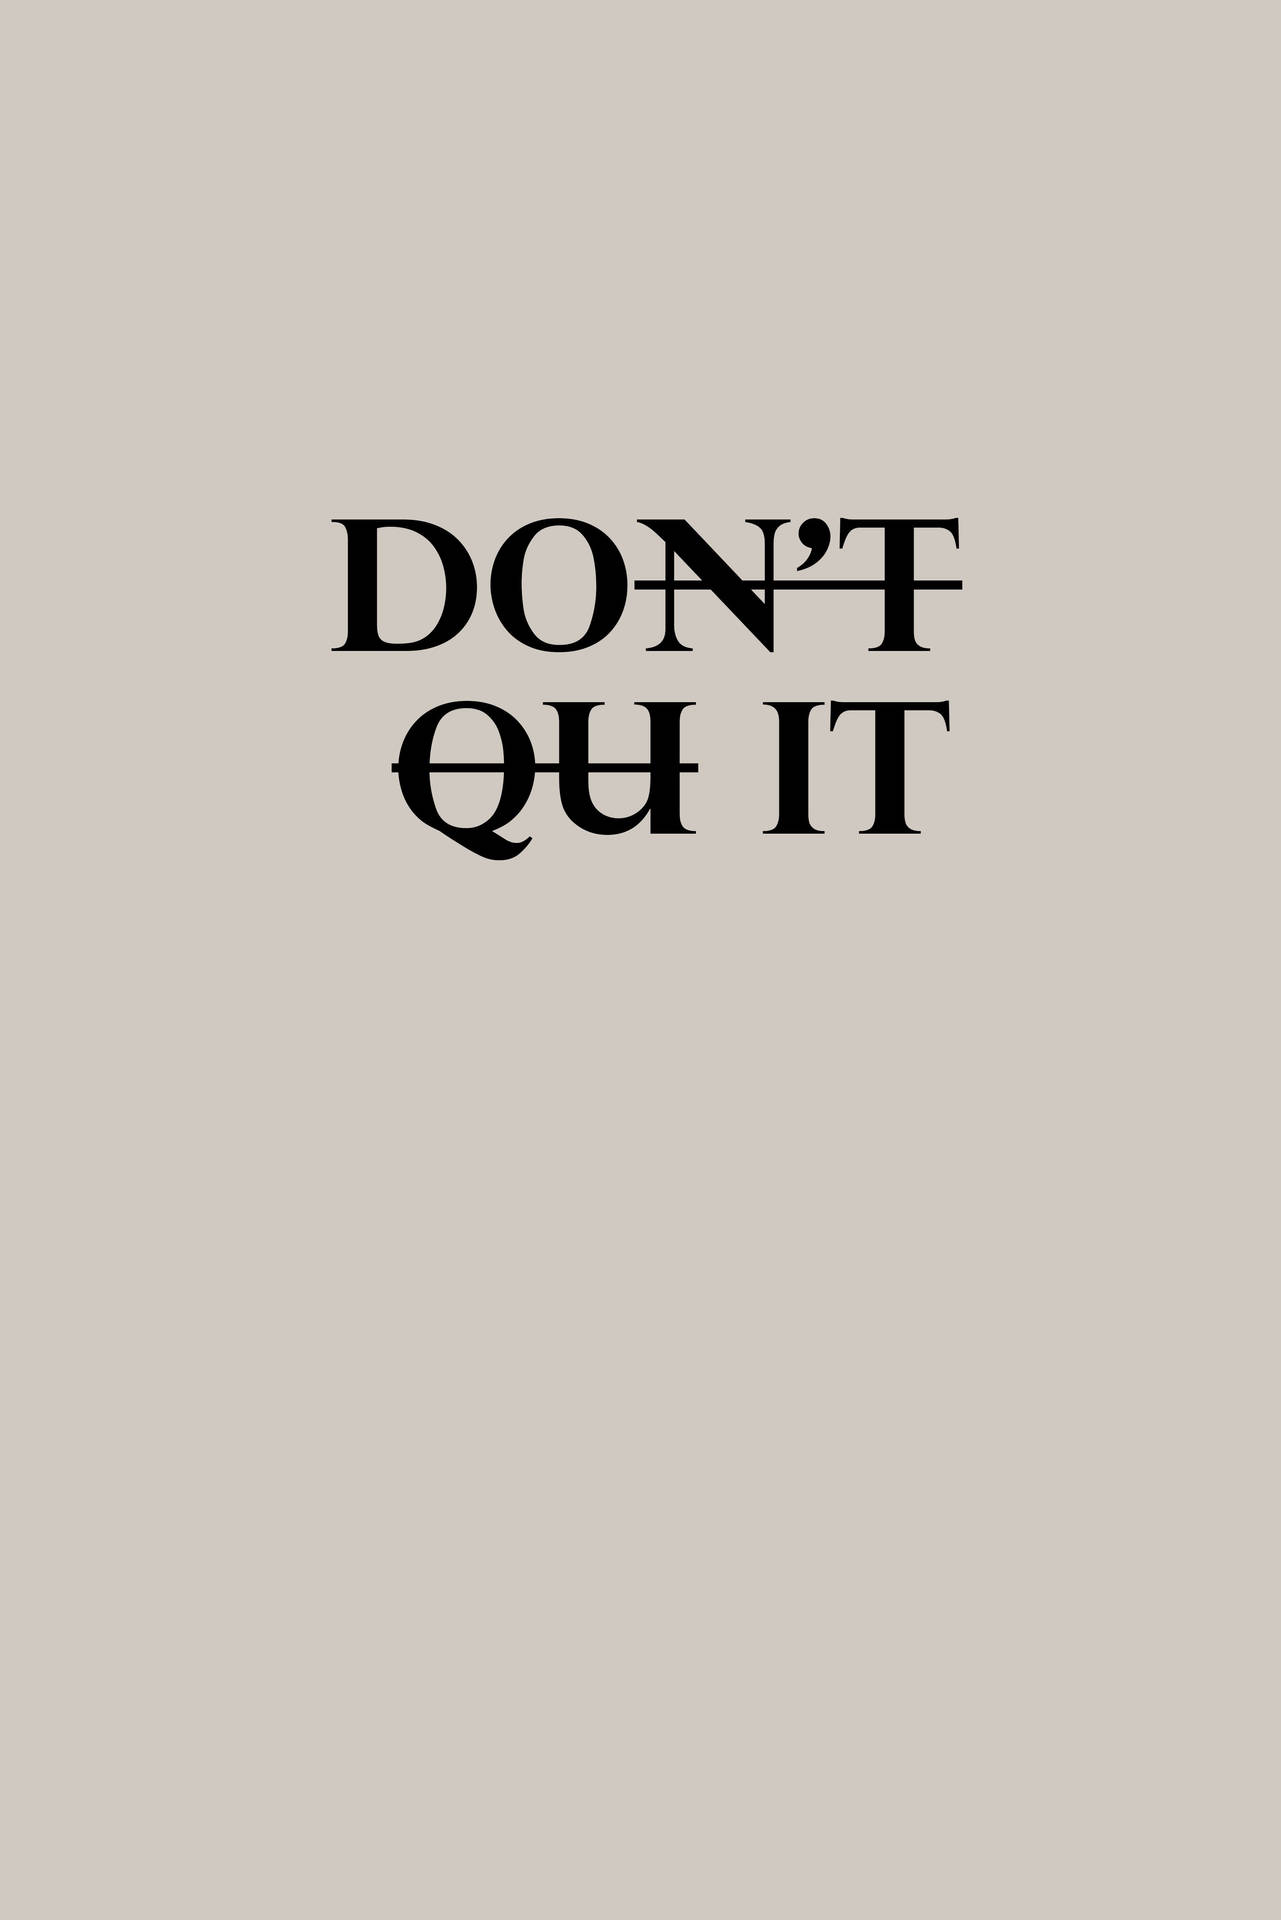 Don't quit Wallpaper.